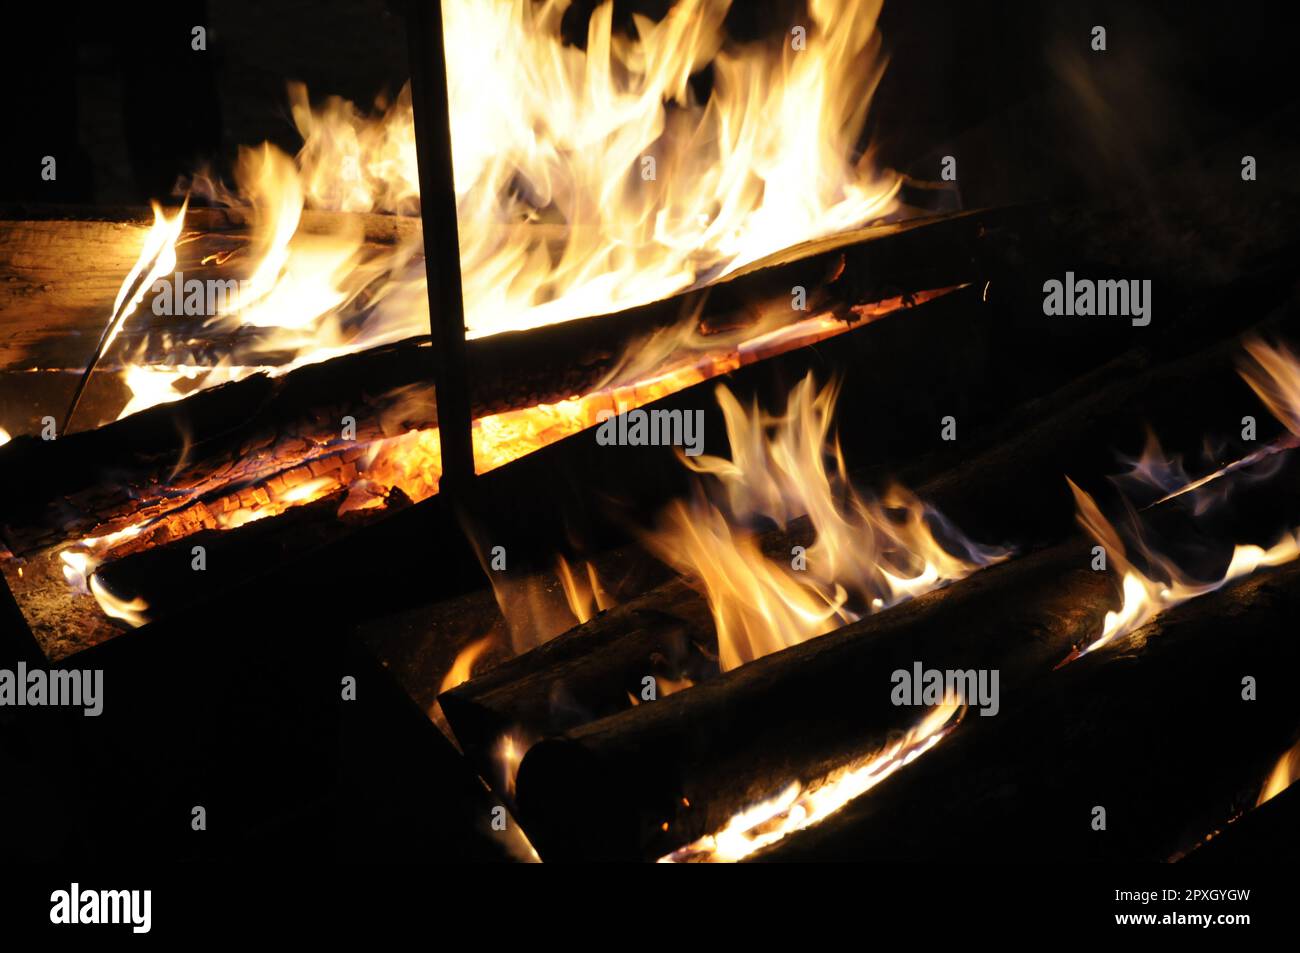 Brennendes Holz, holz, brennen, feuer, marque, brennholz, lodern, lodernd, brennend, flamme, flammen, kaminfeuer Banque D'Images